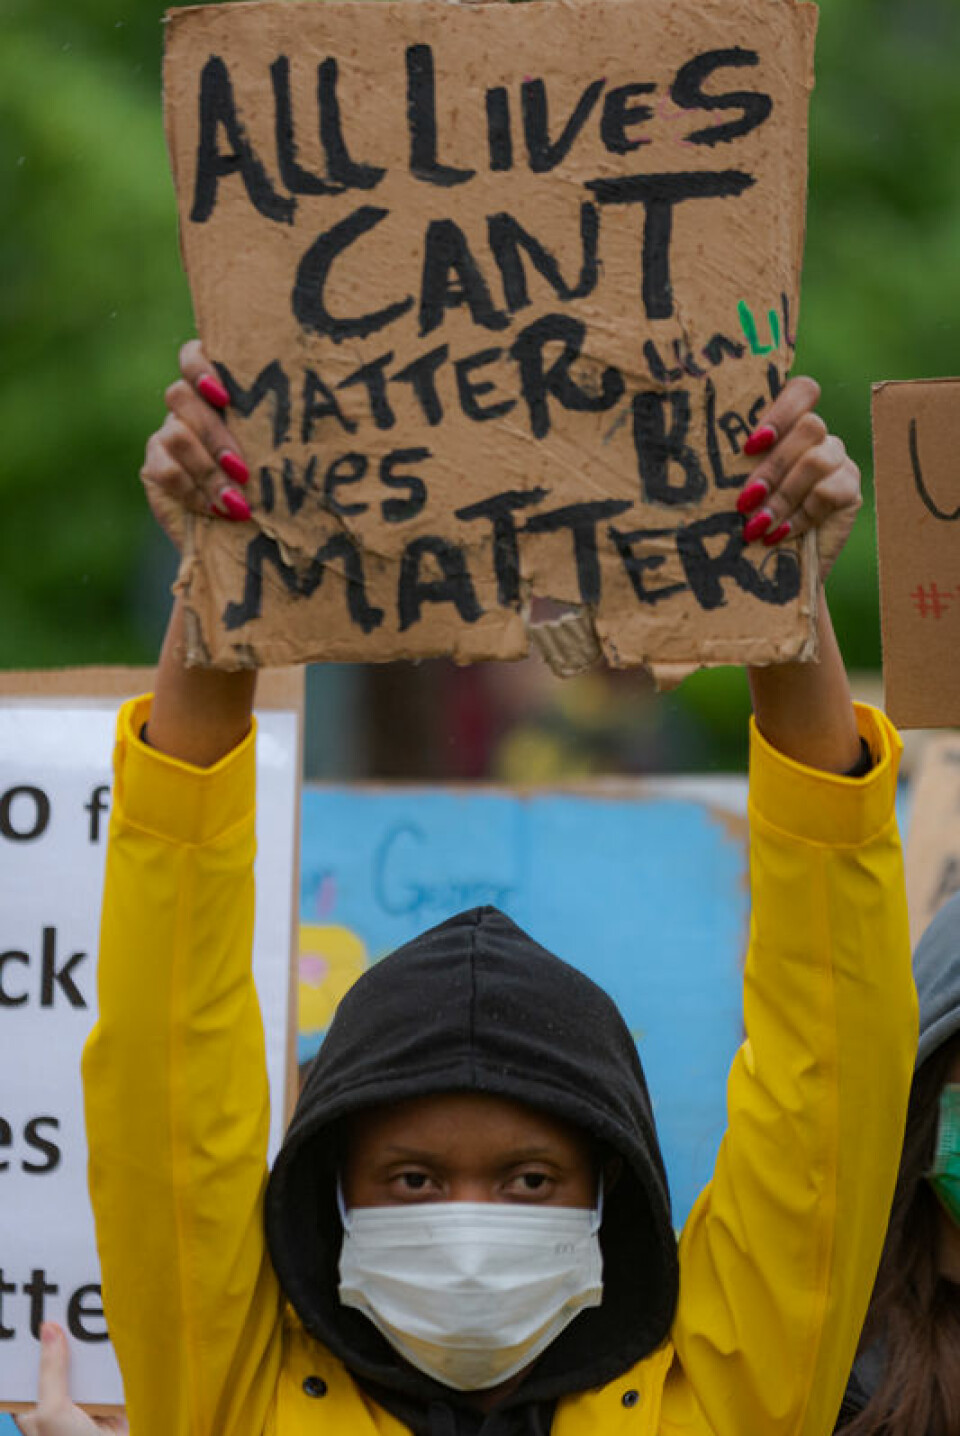 Black lives matter. Foto: Morten Lauveng